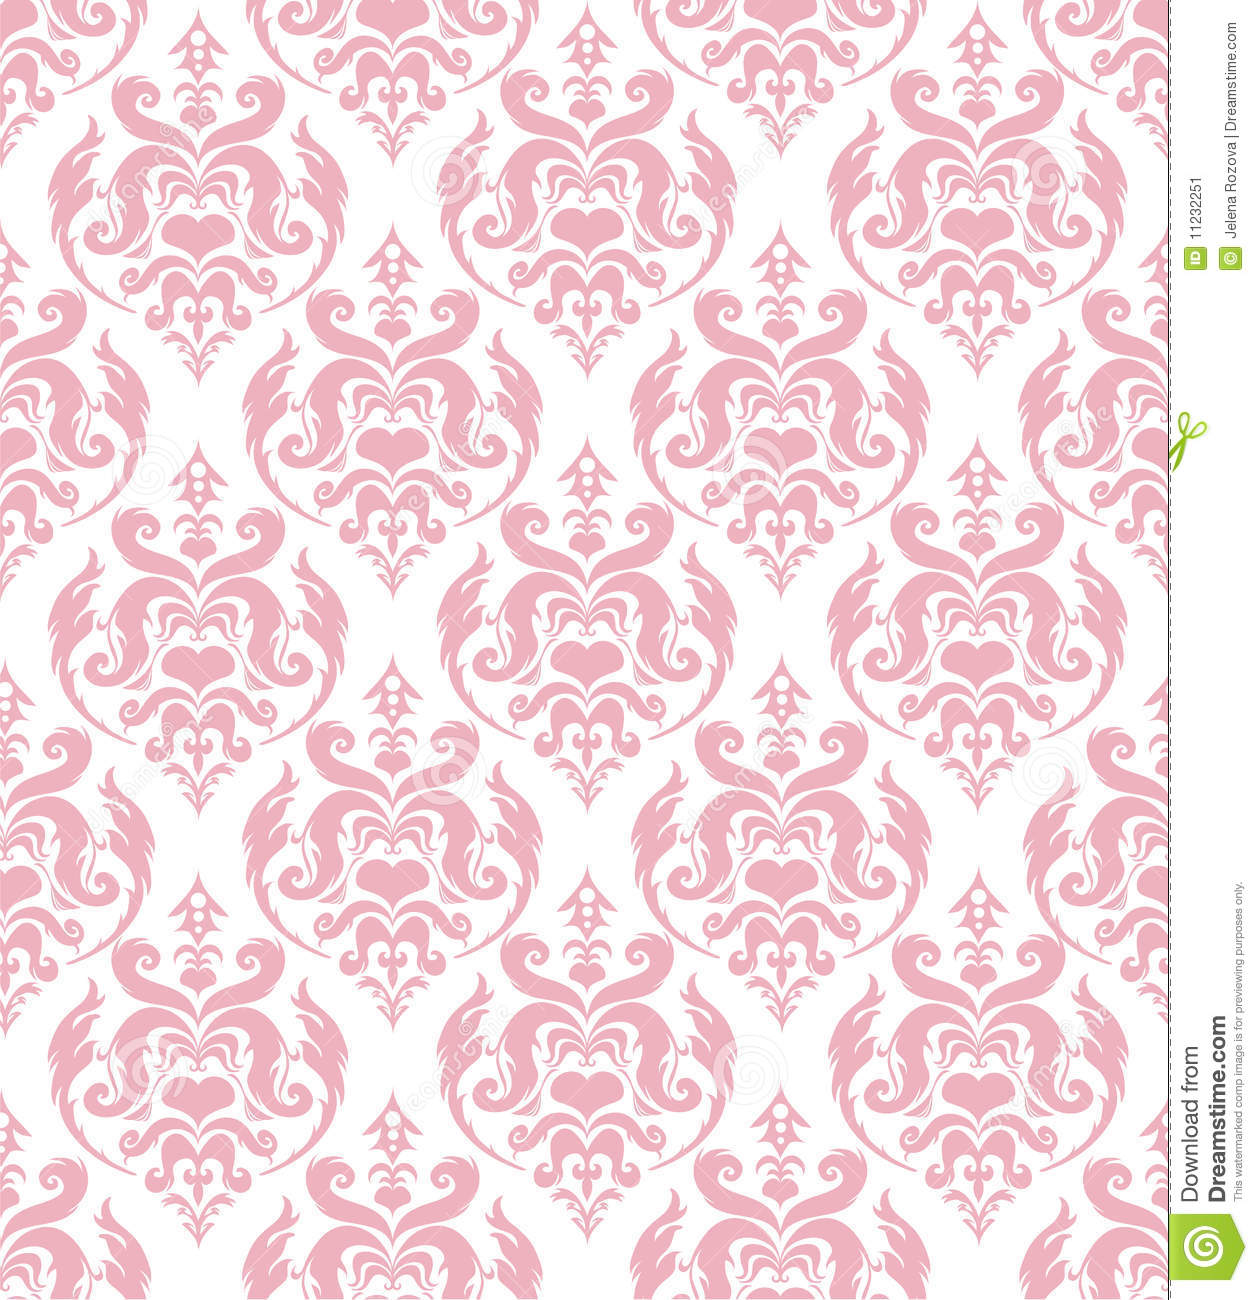 Light Pink Damask Background HD Wallpapers on picsfaircom